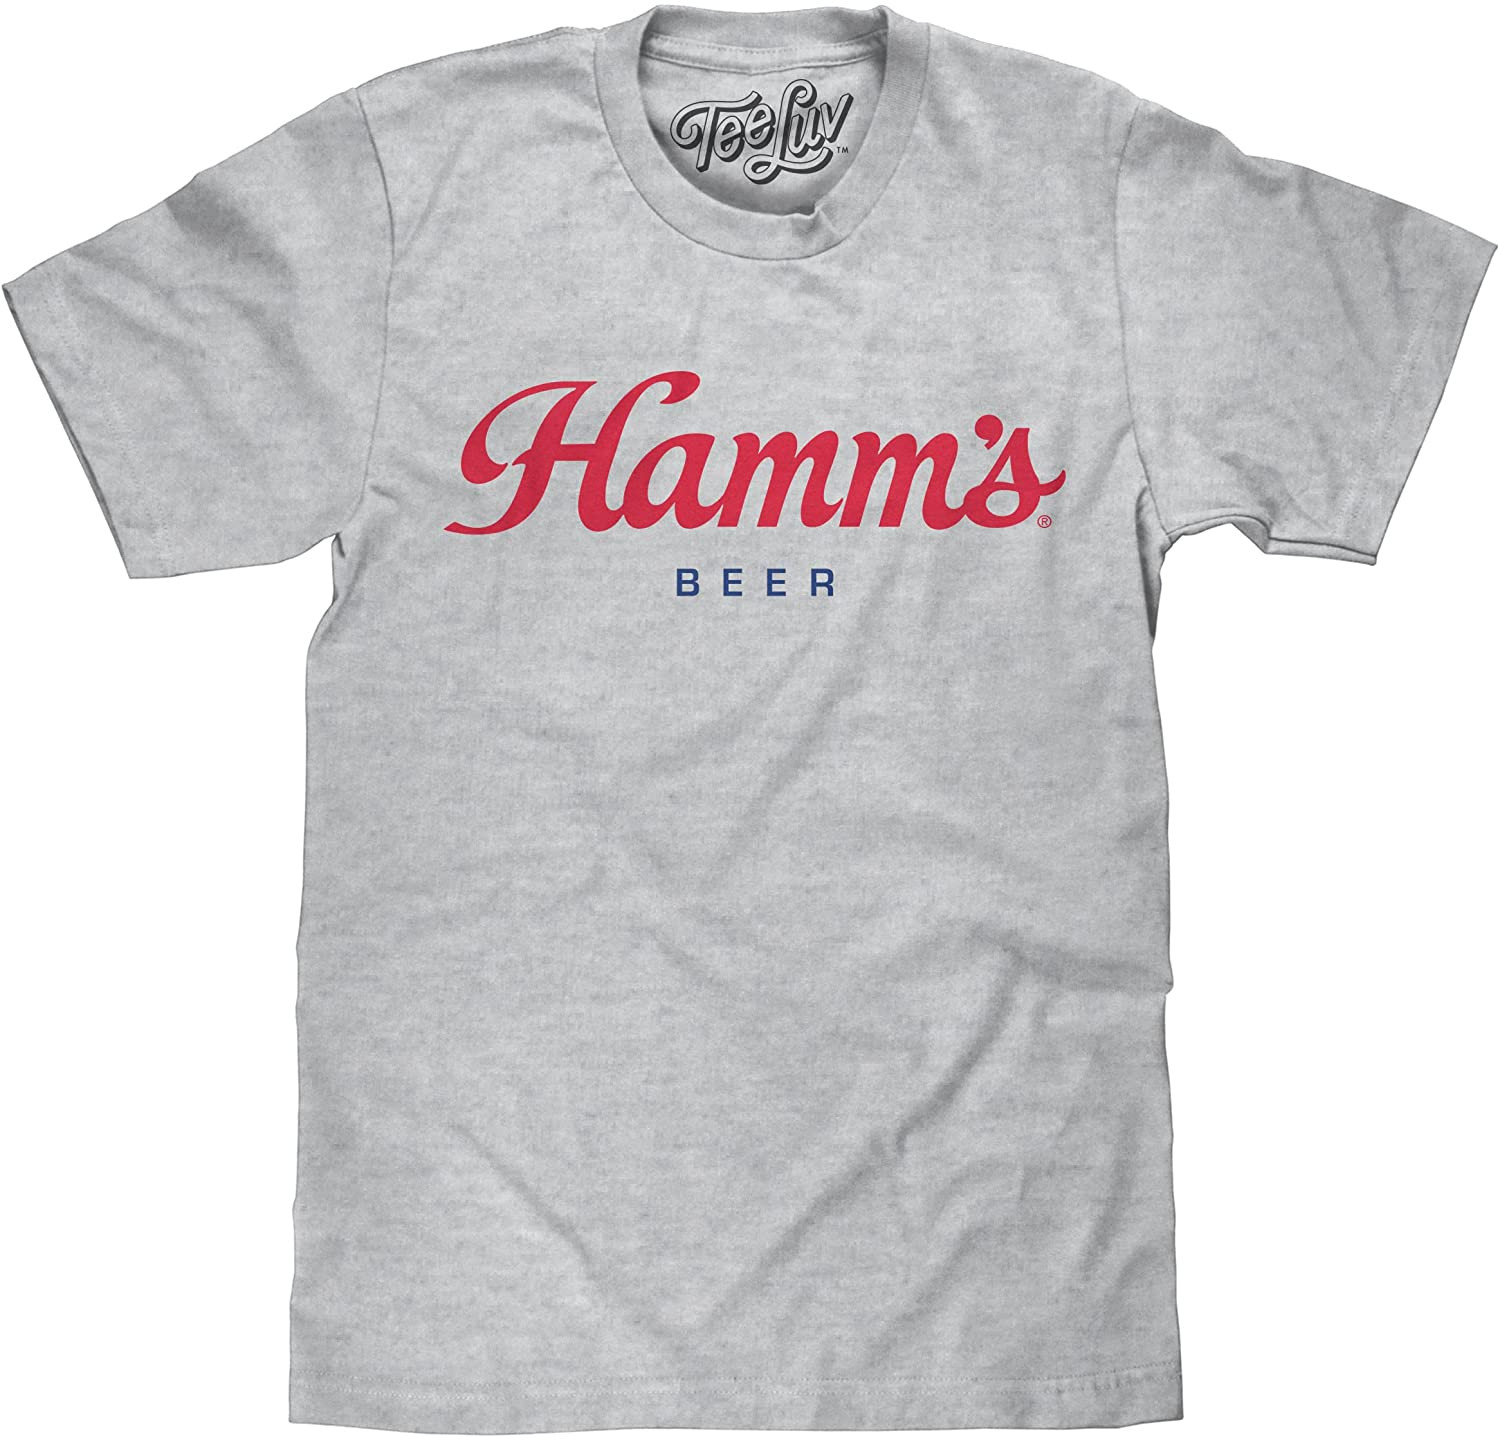 Hamm's Beer T-Shirt